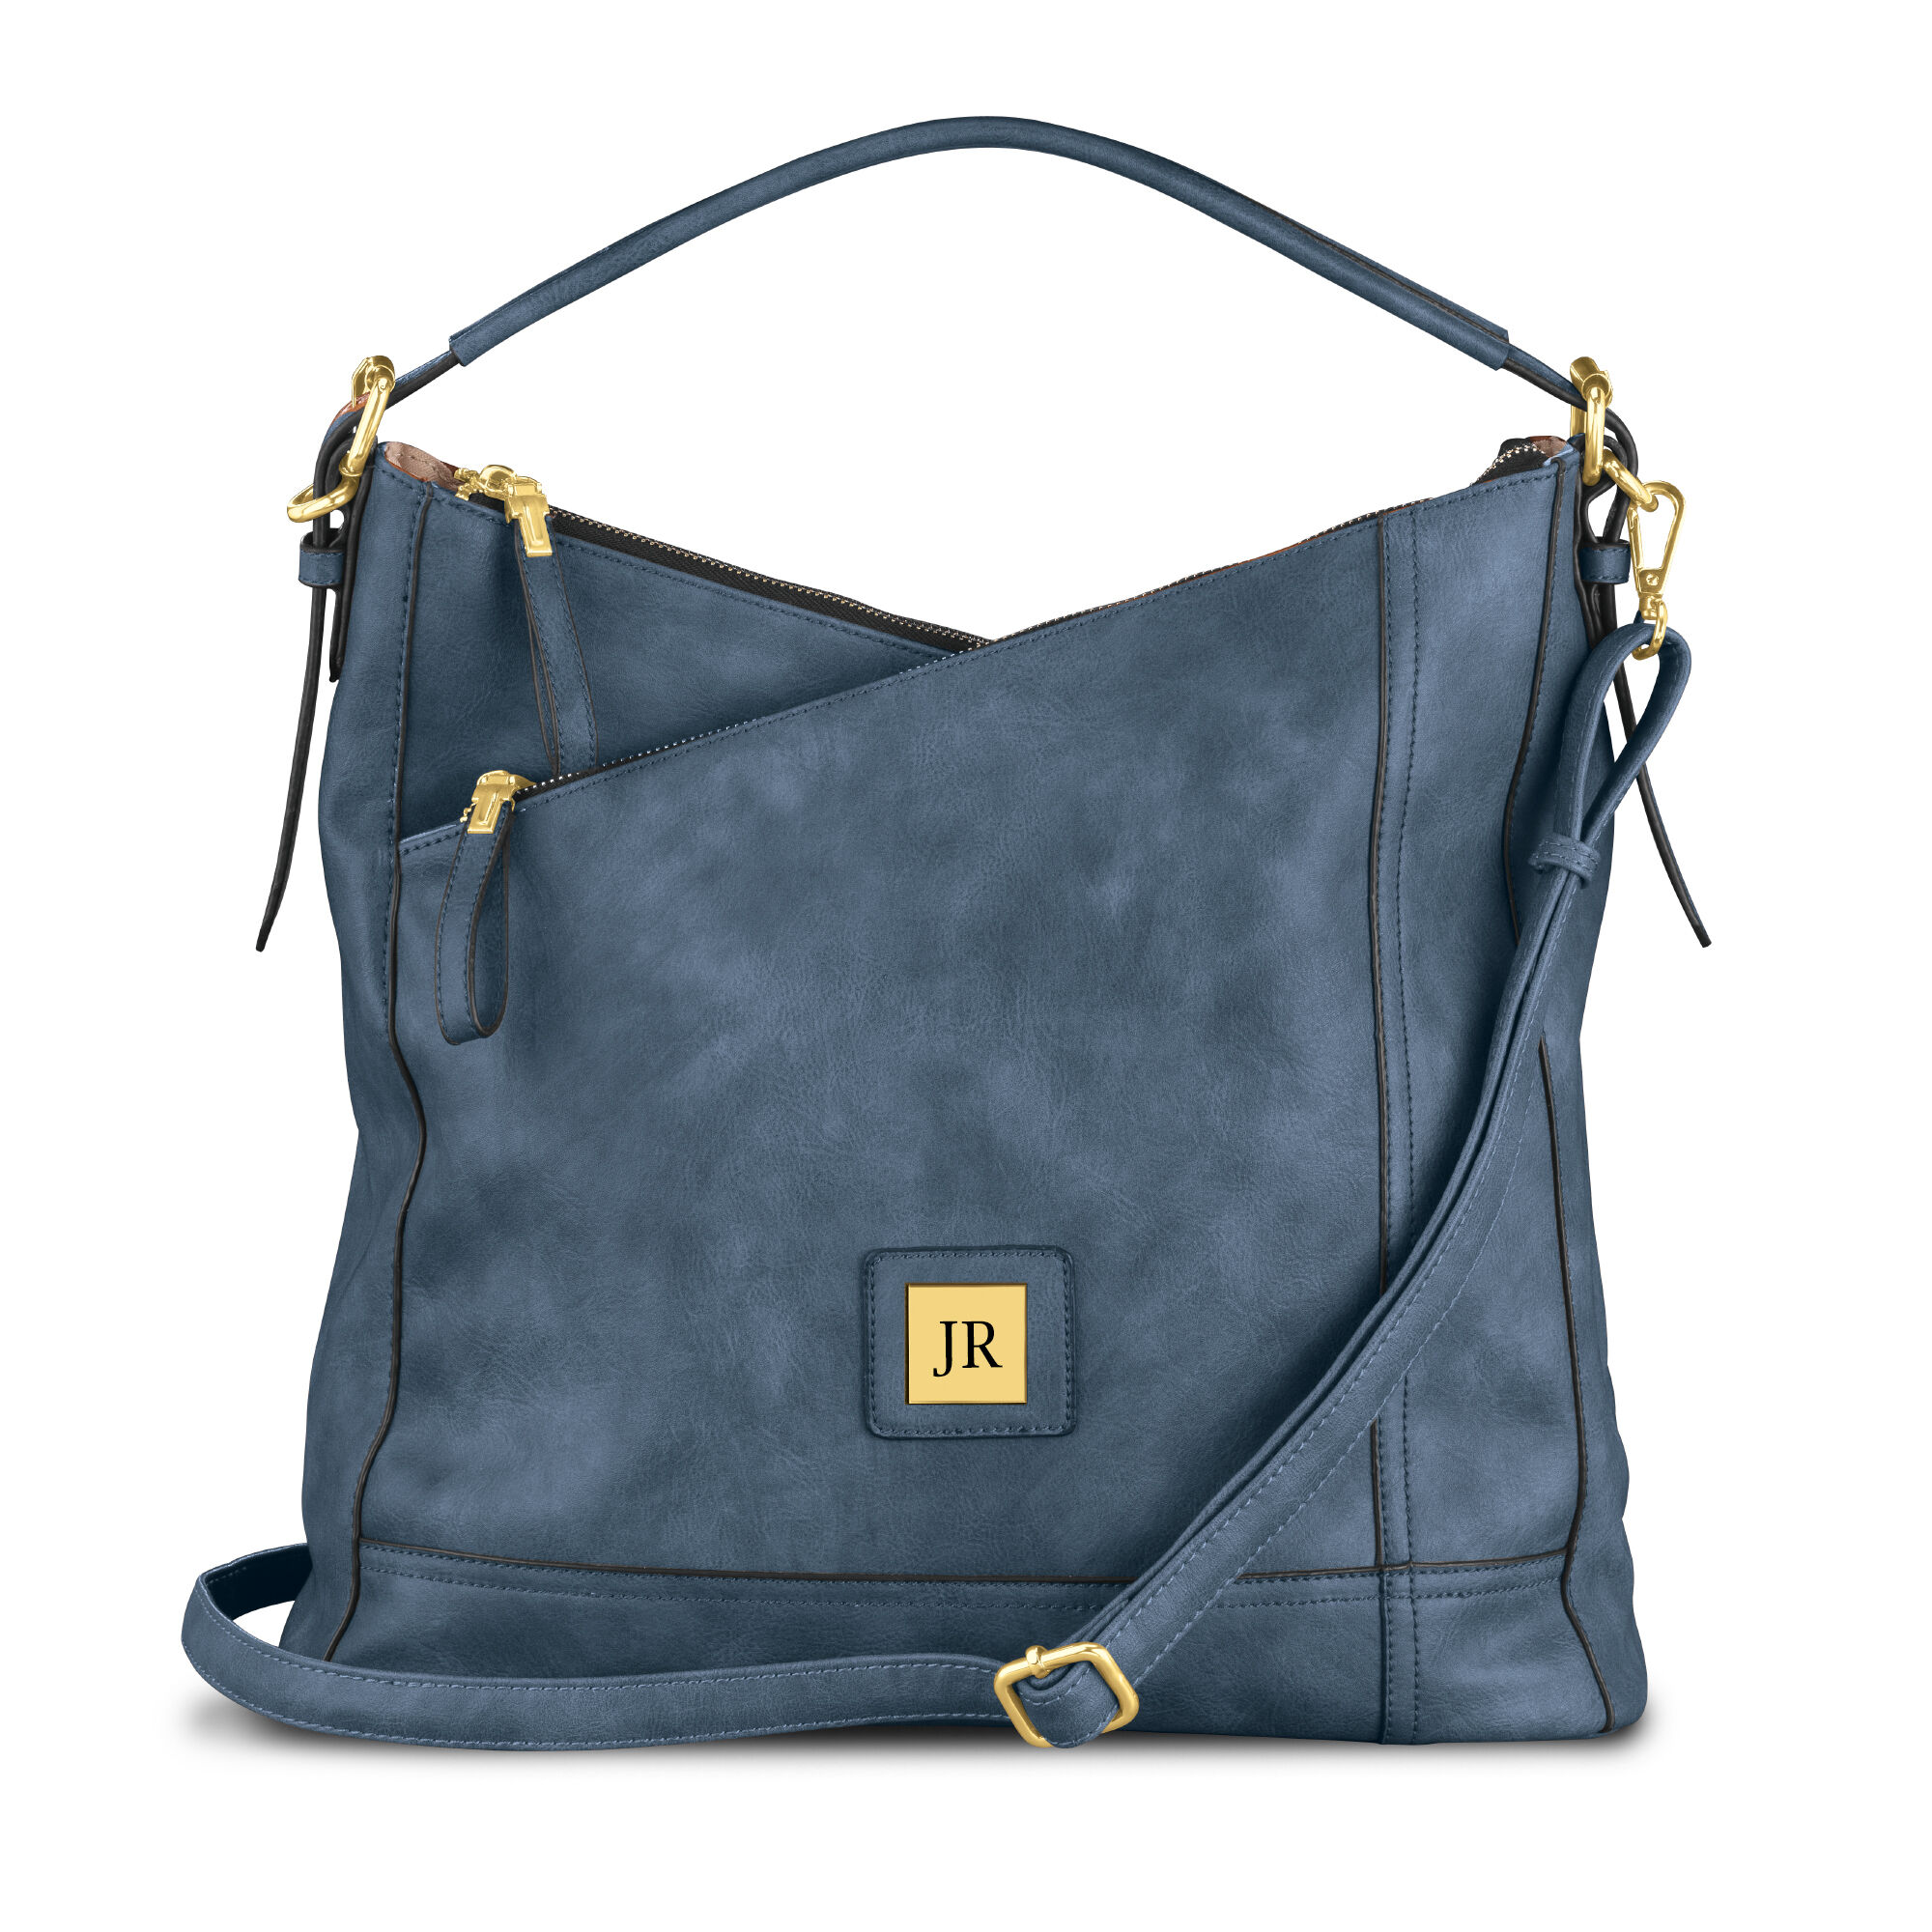 Everywhere Elegance Personalized Handbag 10335 0013 a main